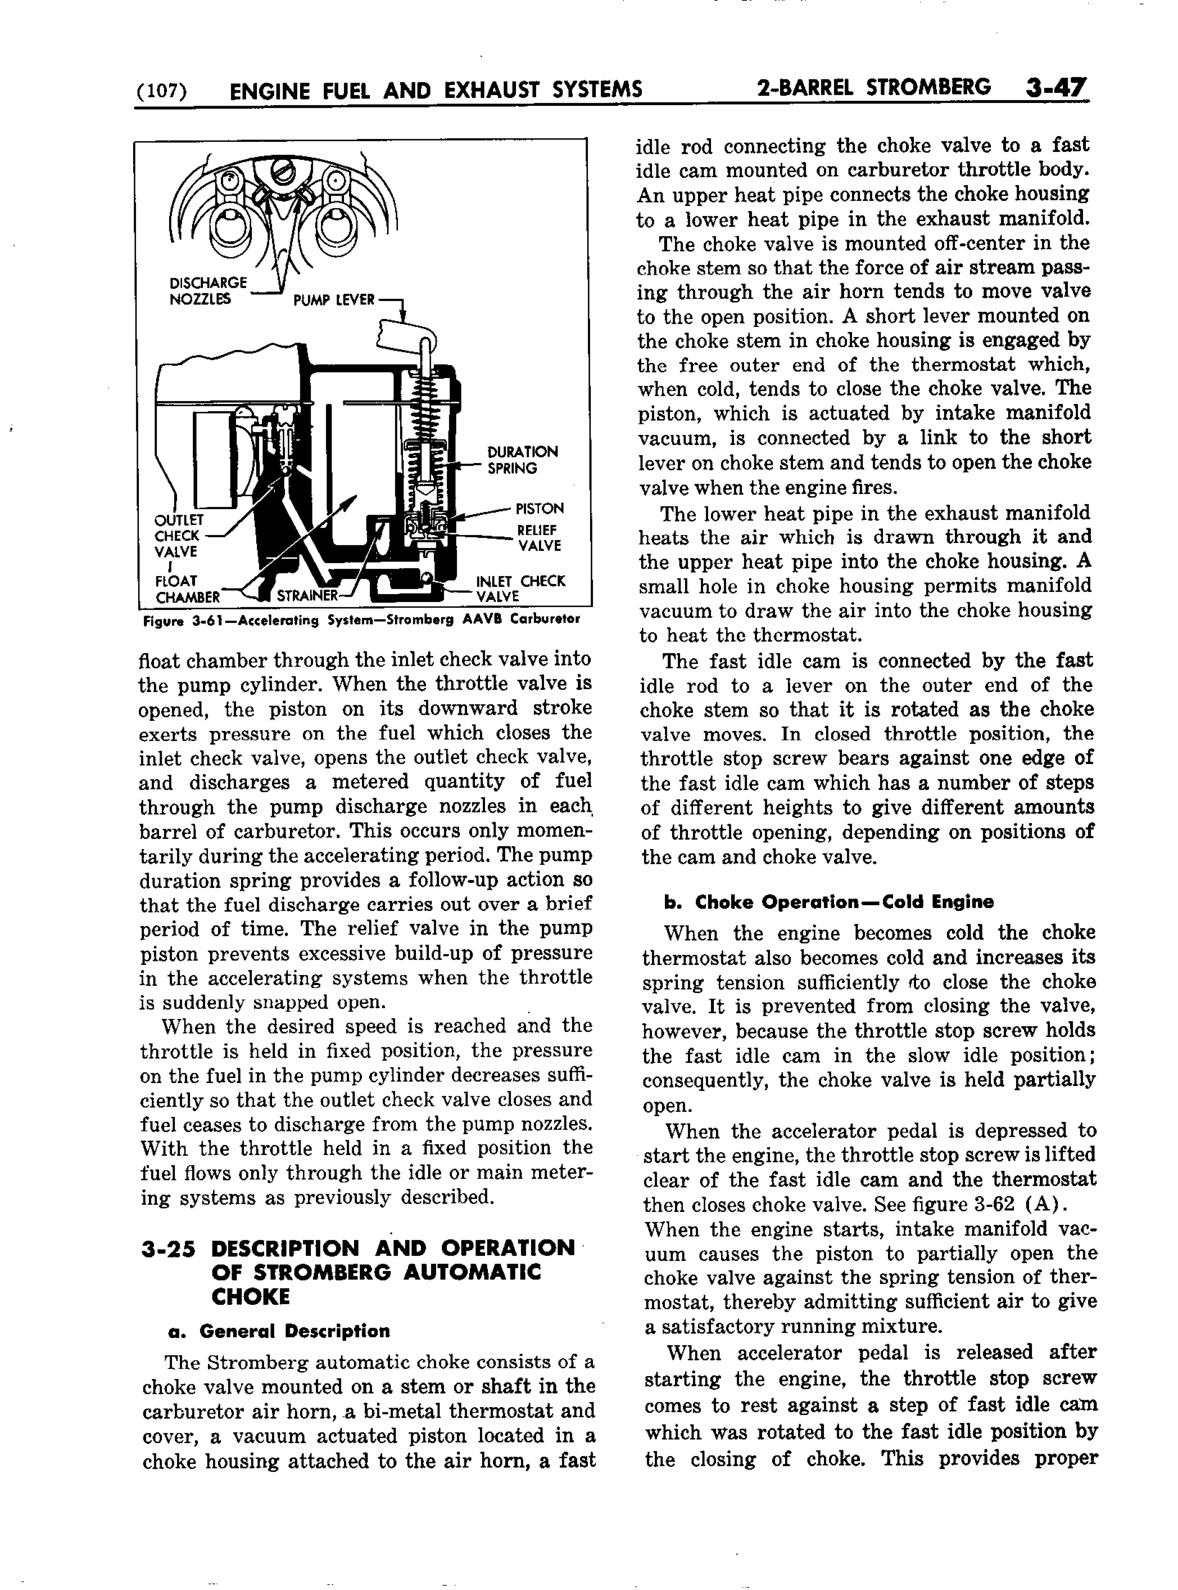 n_04 1953 Buick Shop Manual - Engine Fuel & Exhaust-047-047.jpg